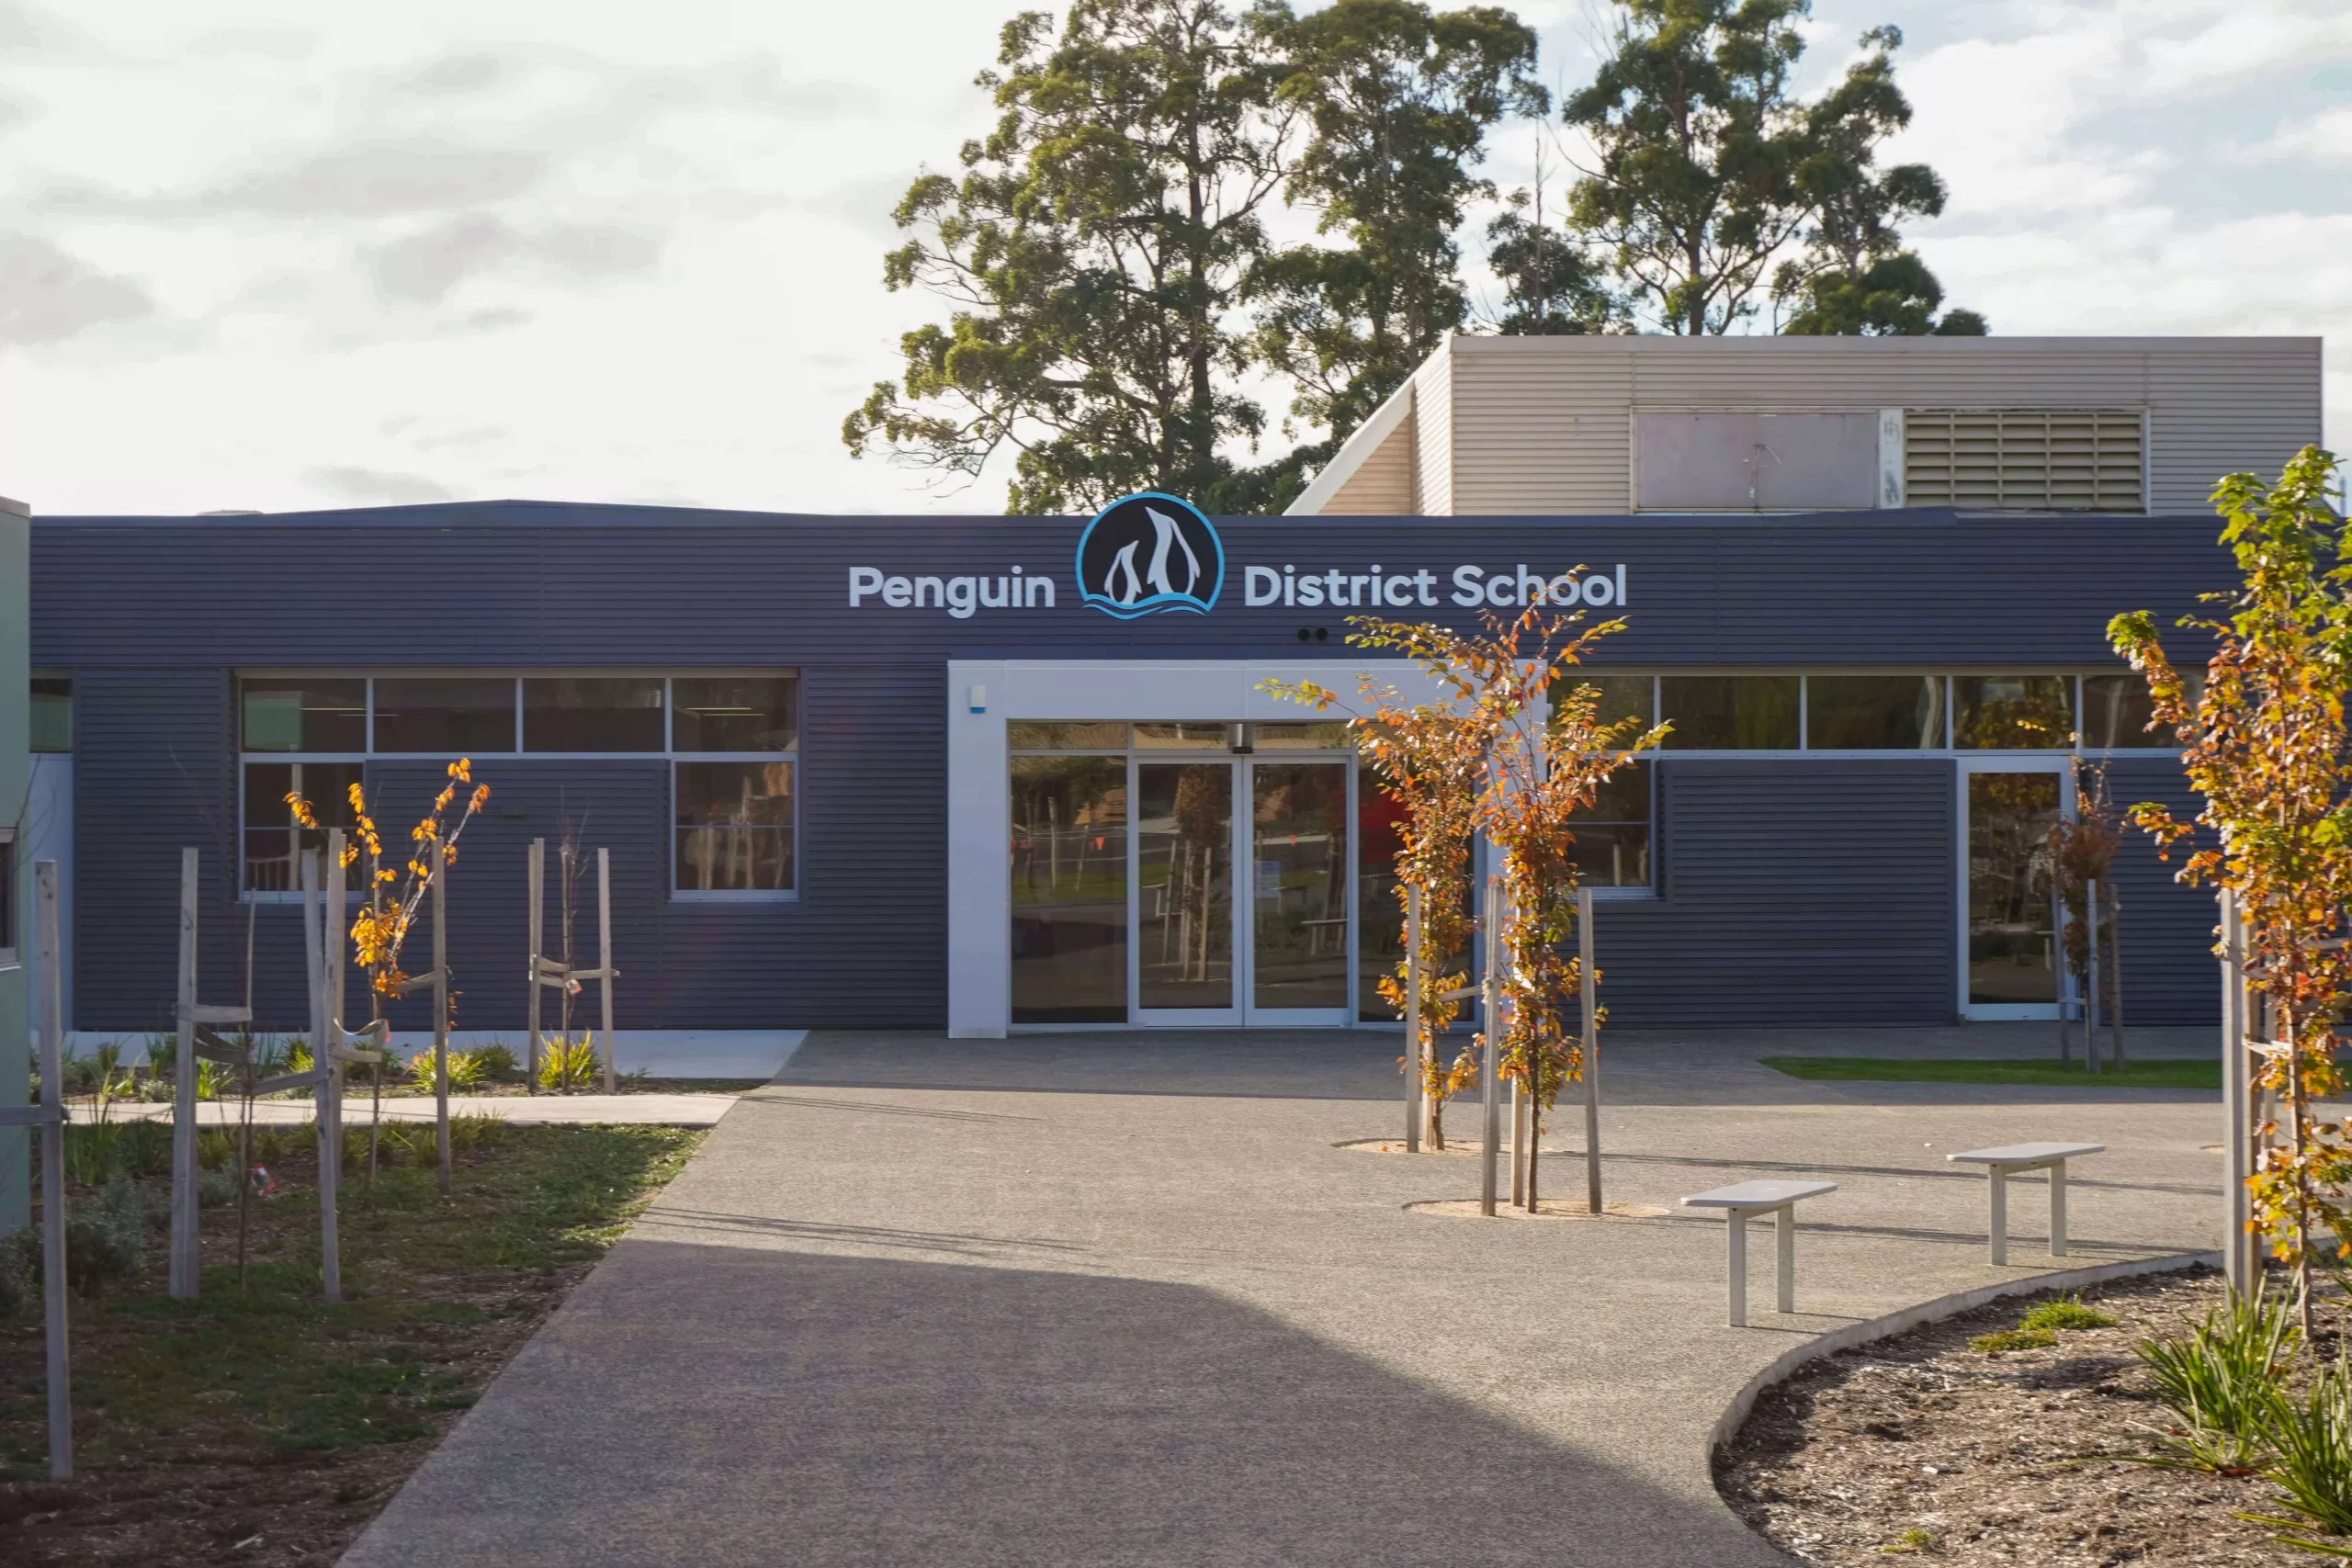 Penguin District School Signage